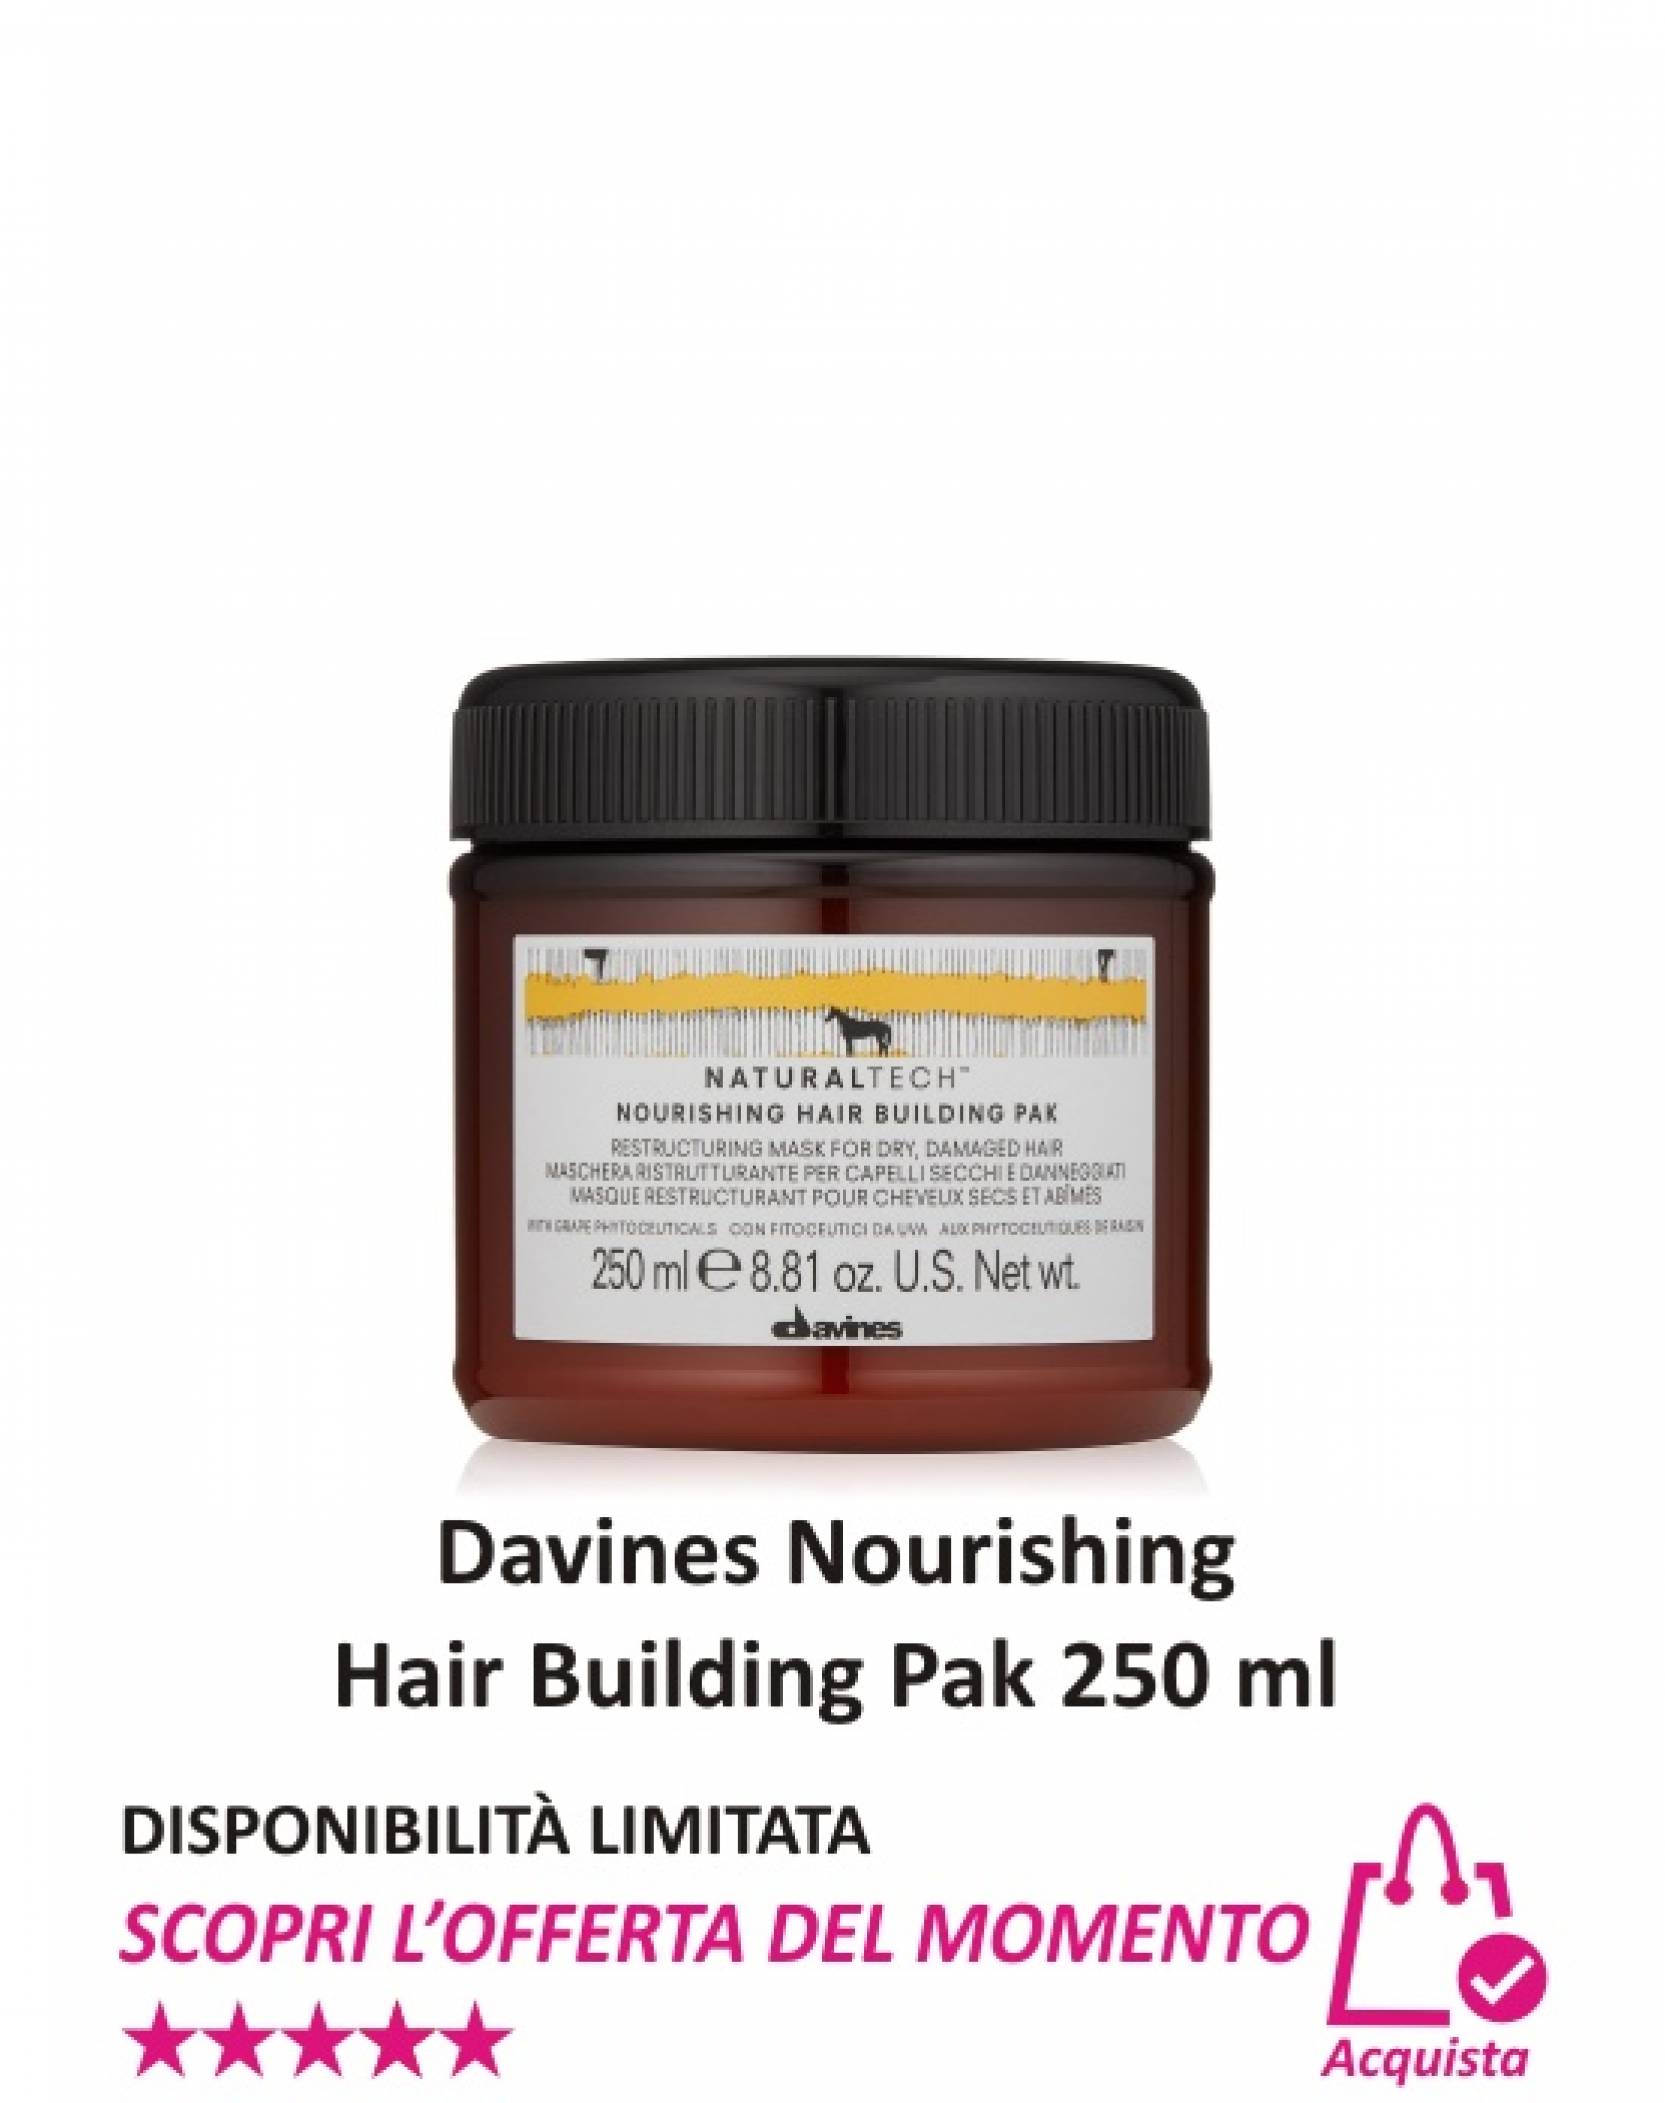 Davines Nourishing Hair Building Pak 250 ml